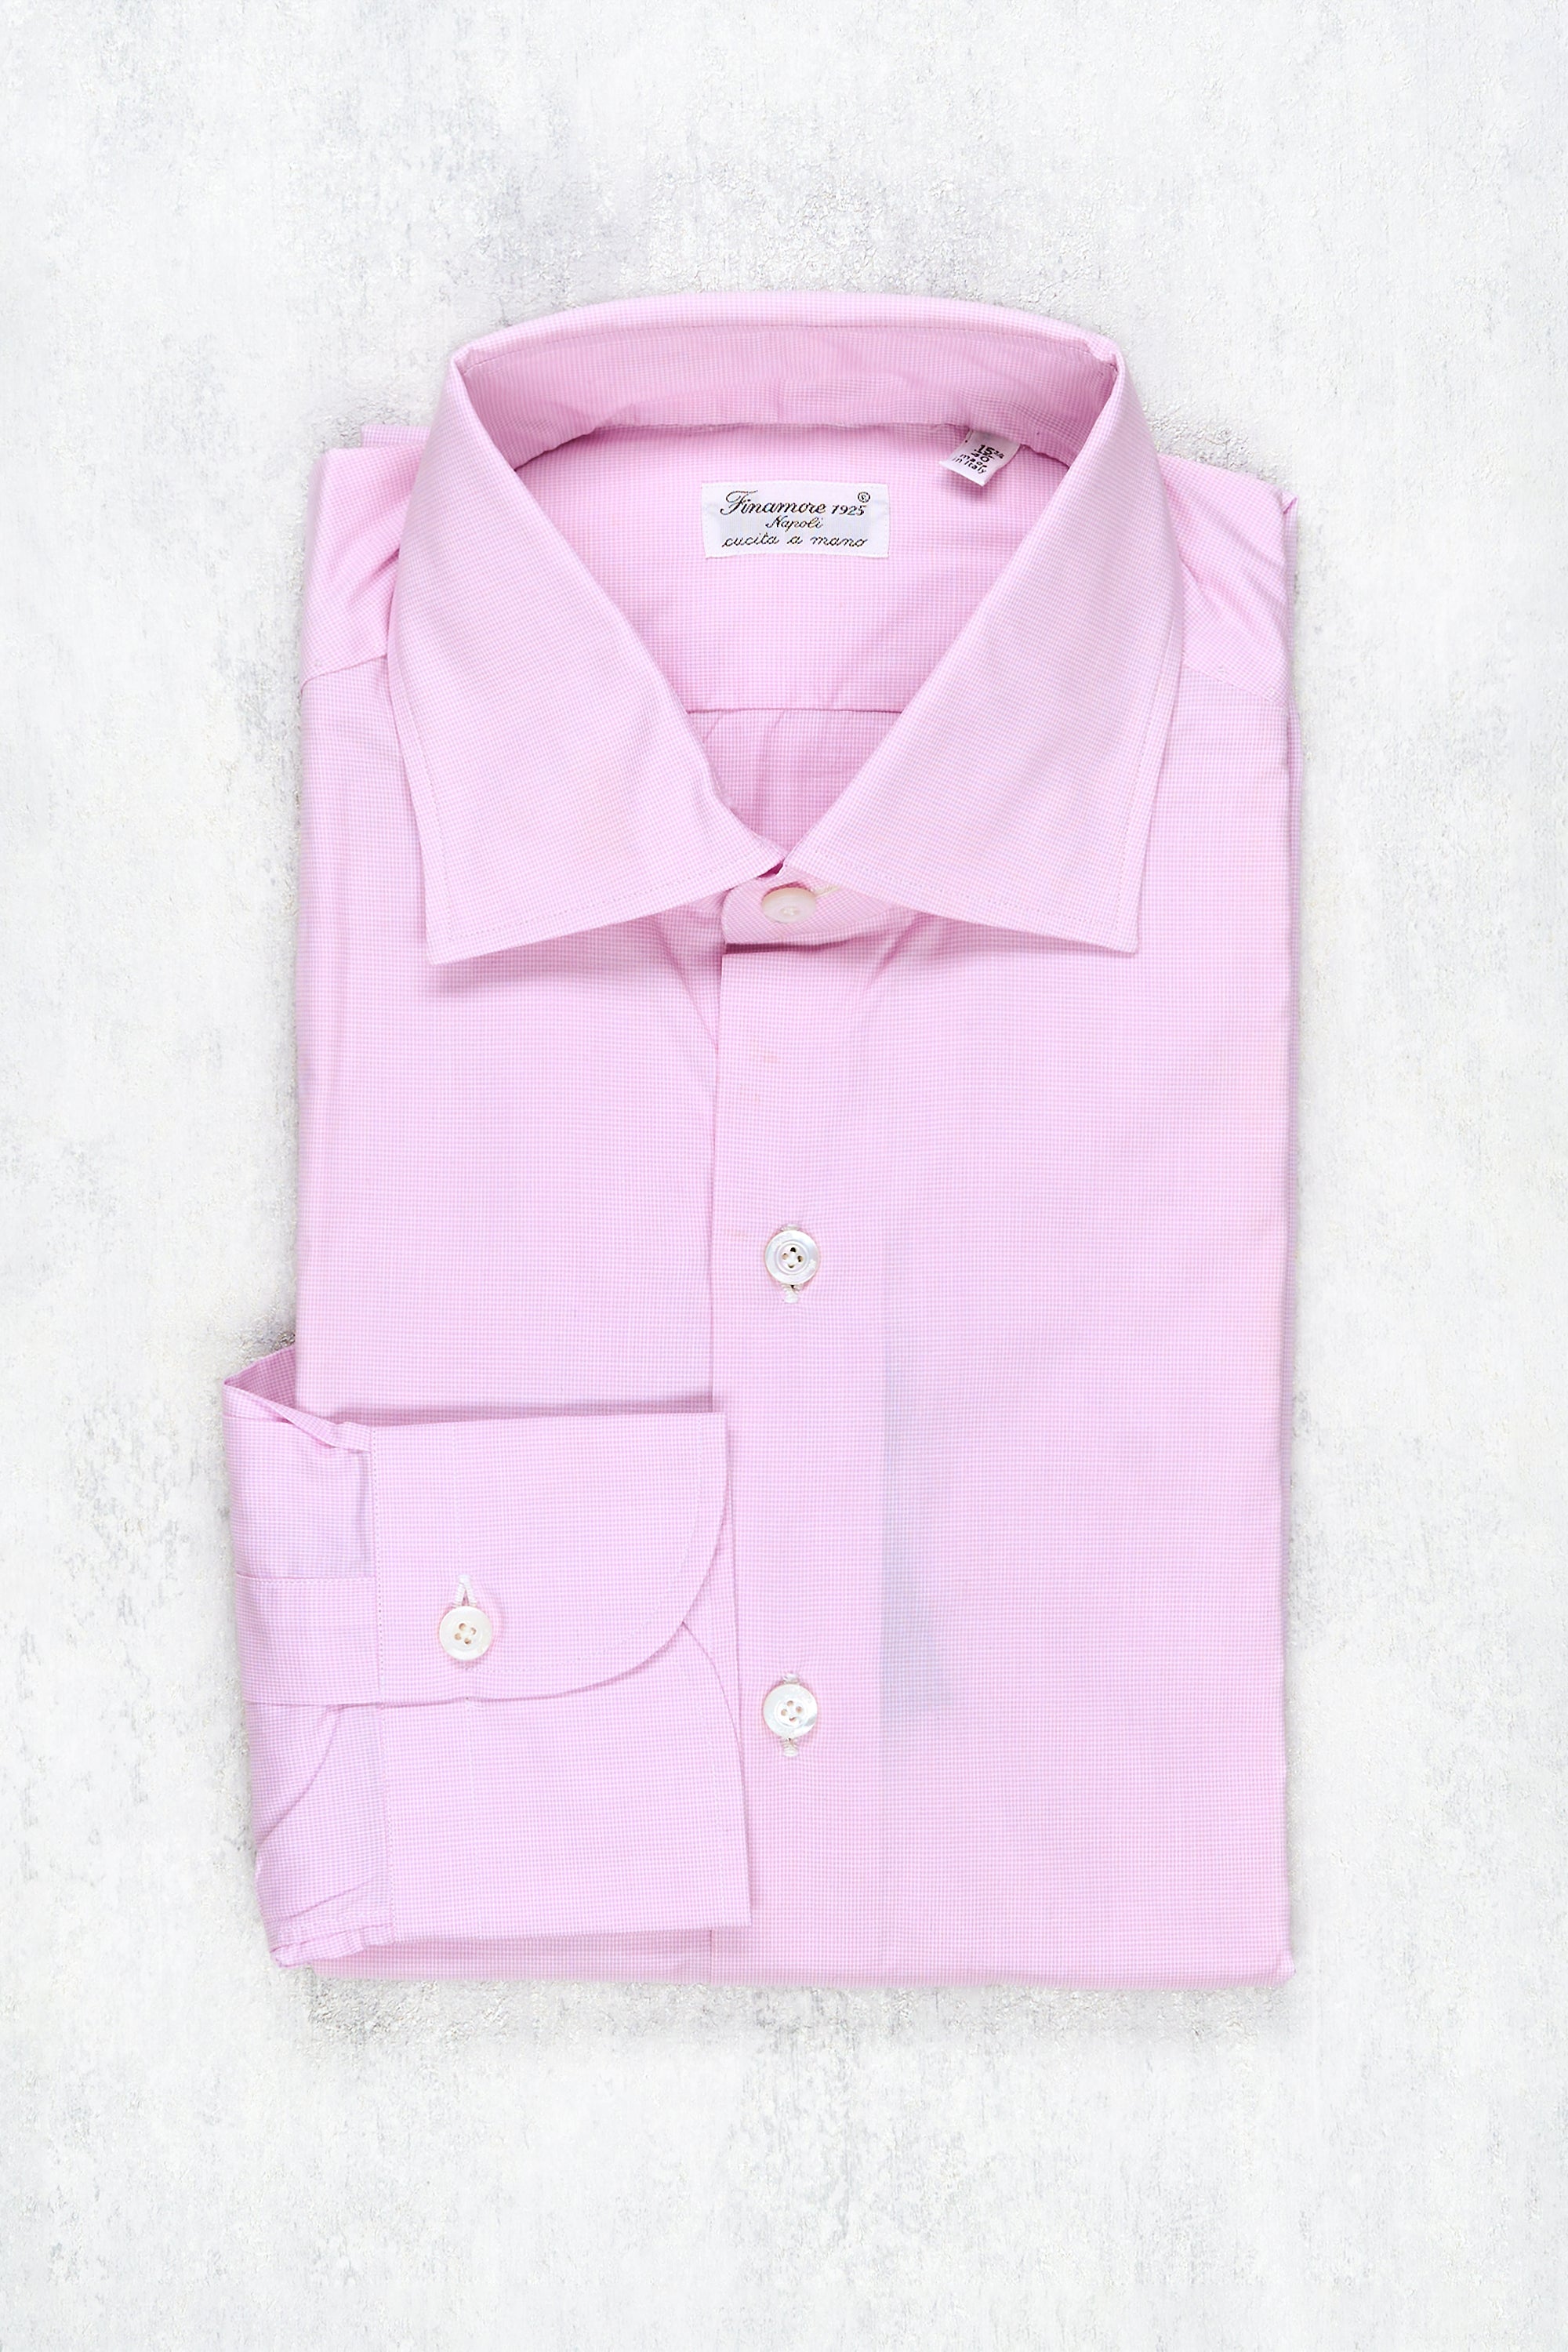 Finamore Pink Pinchecks Cotton Spread Collar Dress Shirt